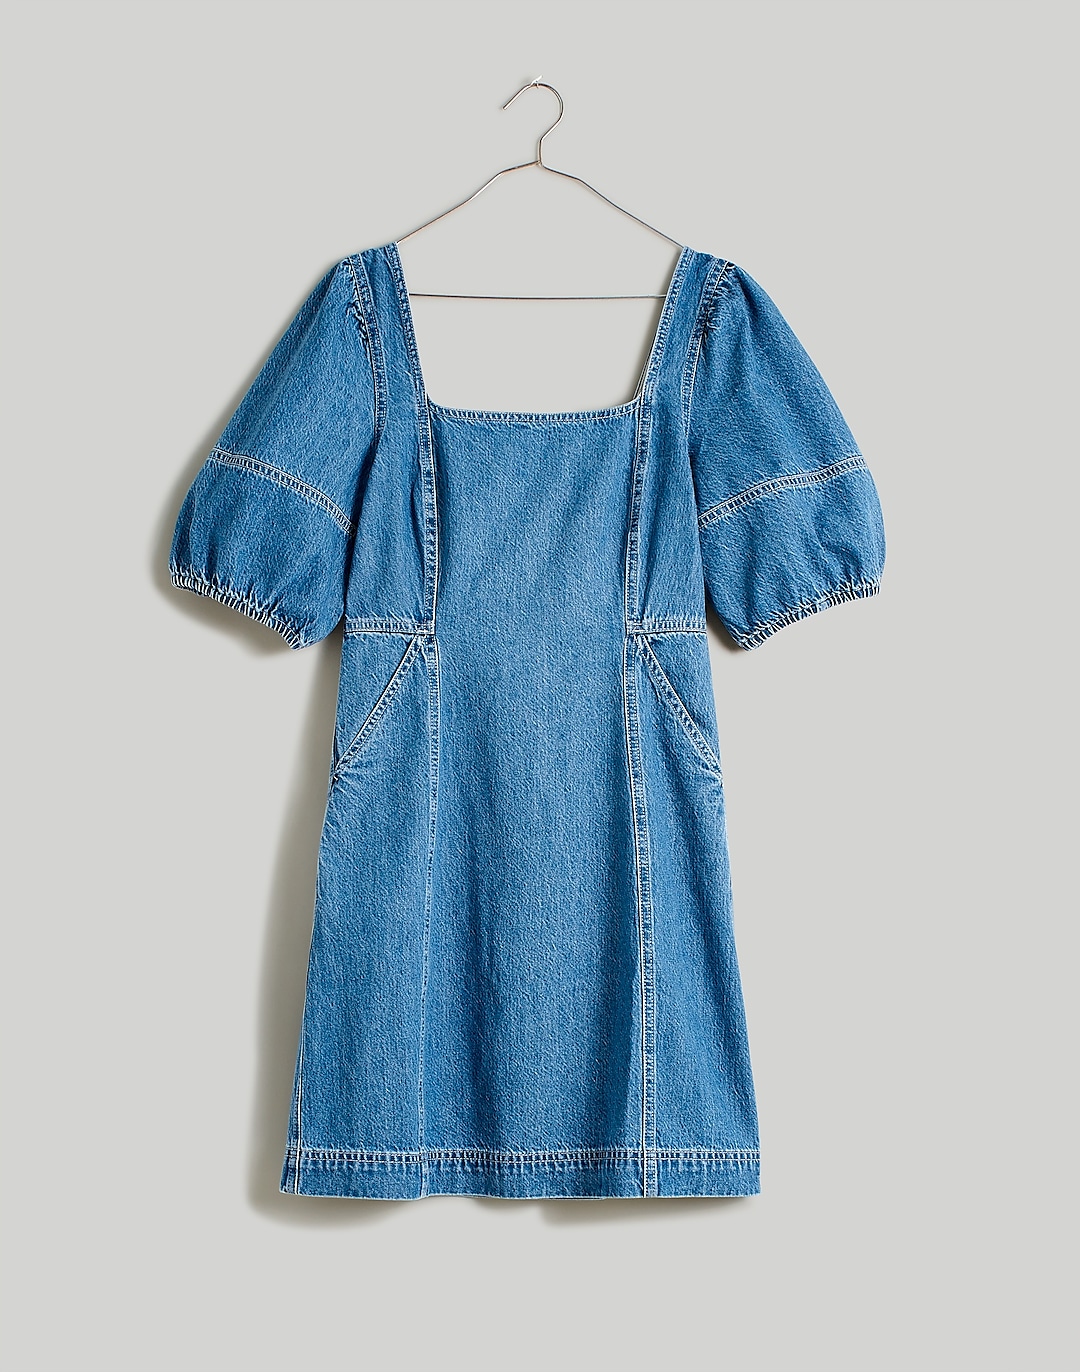 Denim Maisie MIni Dress in Fennwood Wash | Madewell